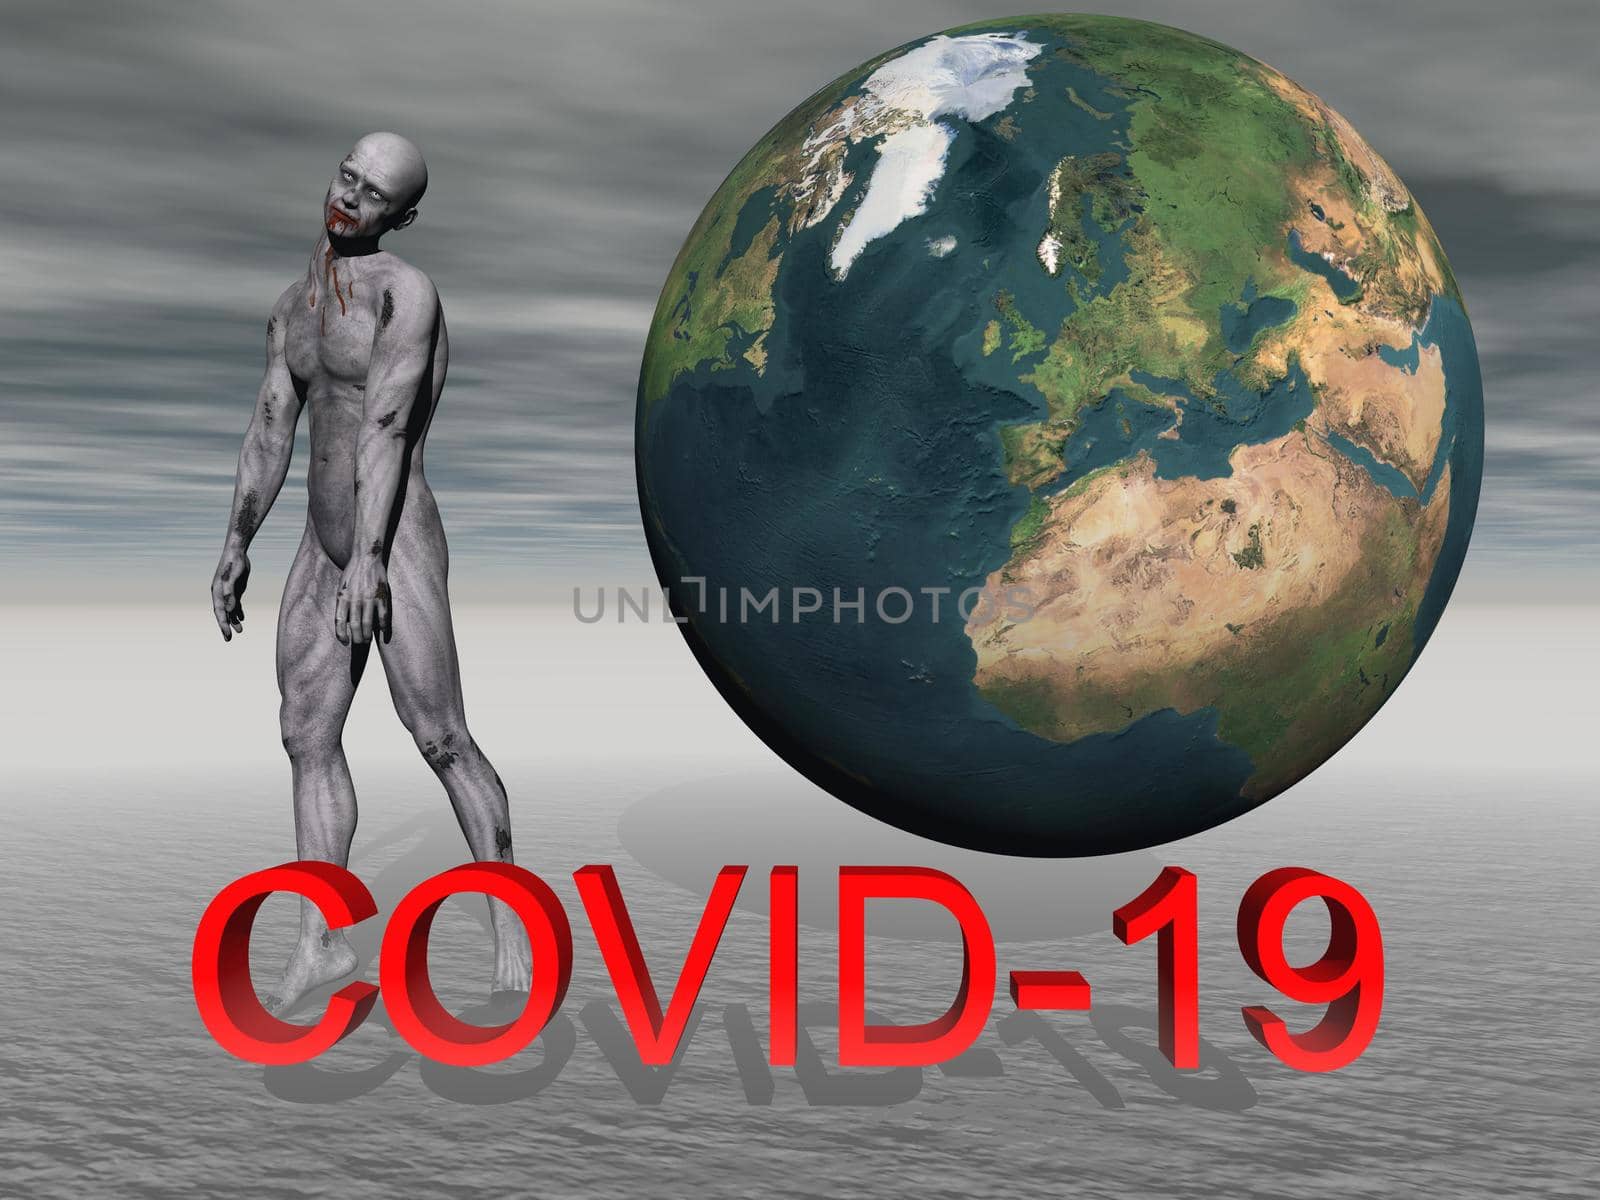 stop coronavirus and sky - 3d rendering by mariephotos